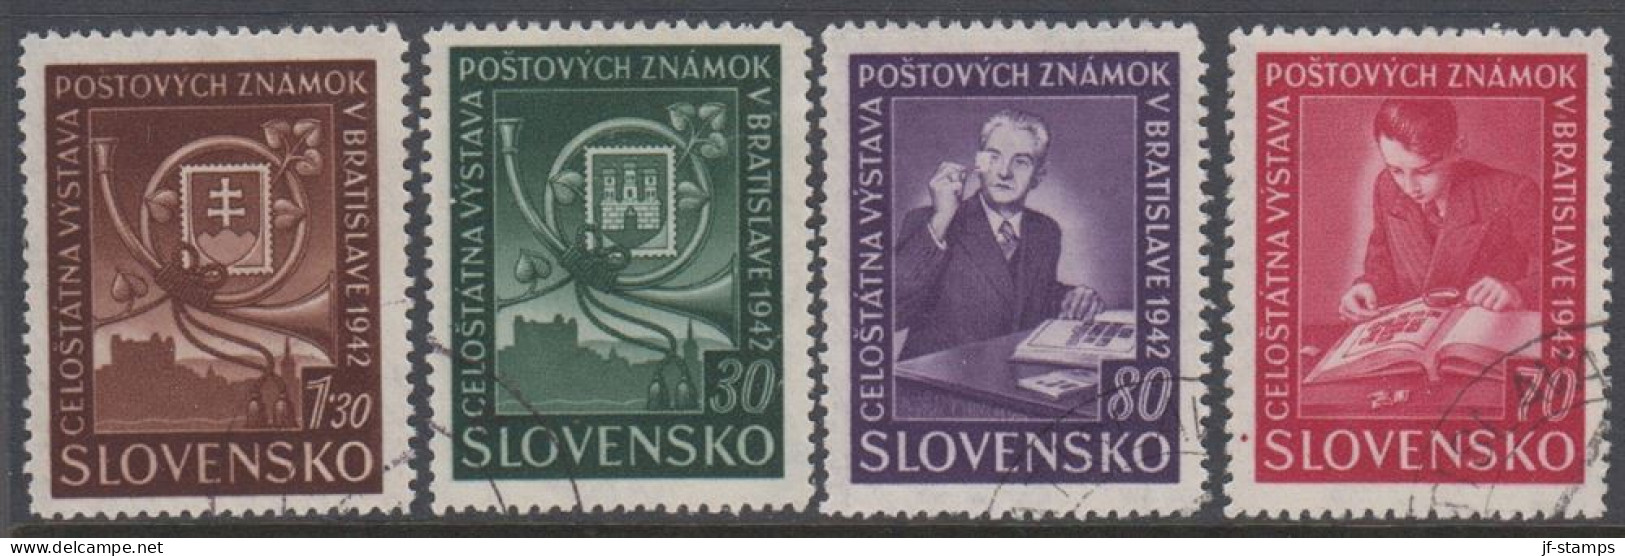 1942. SLOVENSKO Stamp Show. Complete Set Of 4 Stamps.  (Michel 98-101) - JF418428 - Used Stamps